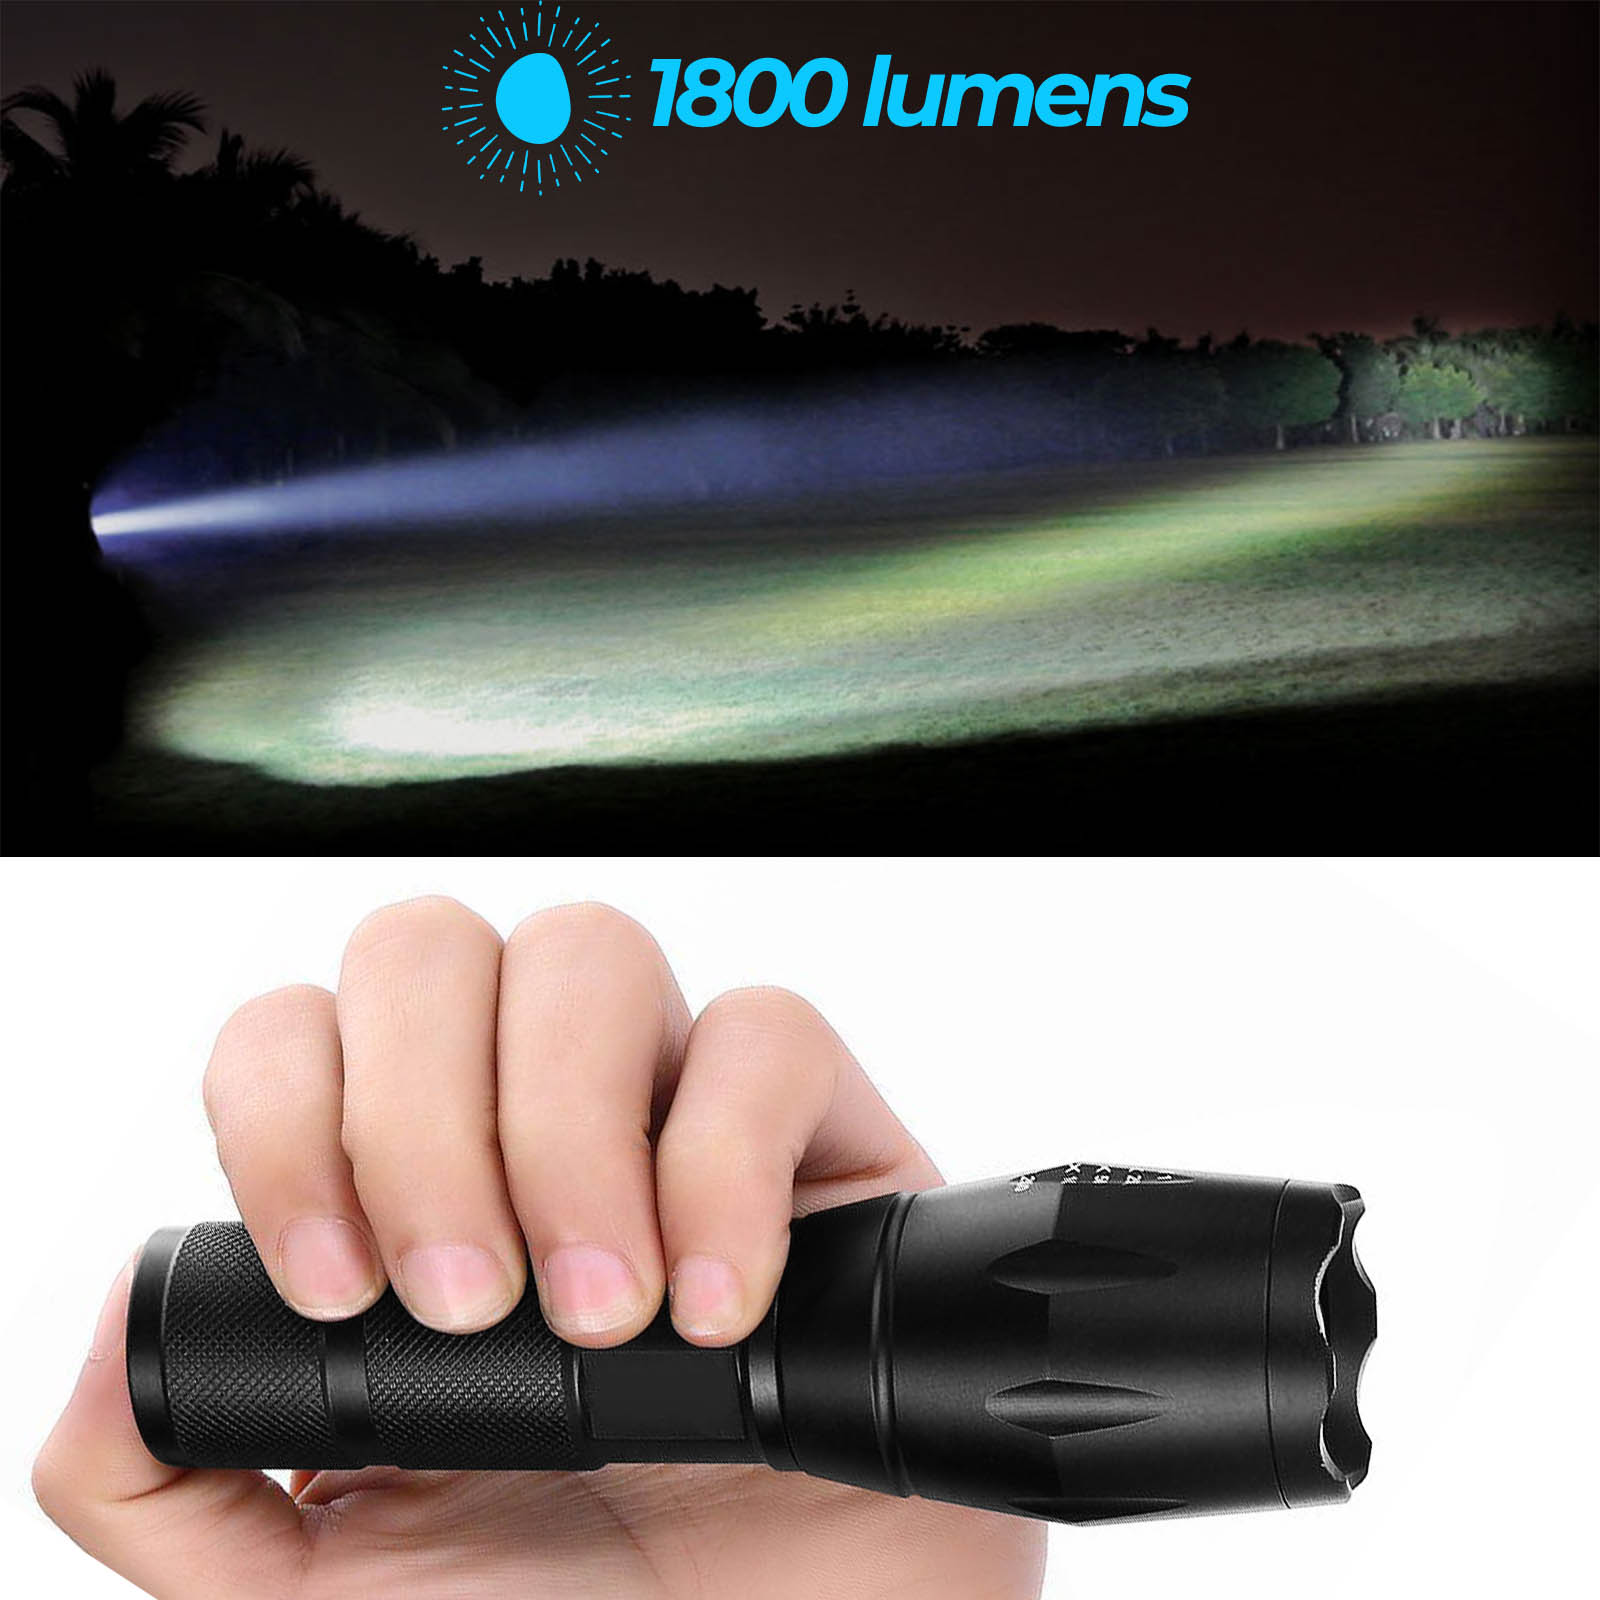 Torcia tascabile a LED 1800 lumen, serie LuminX - Zoom 20 metri - Italiano